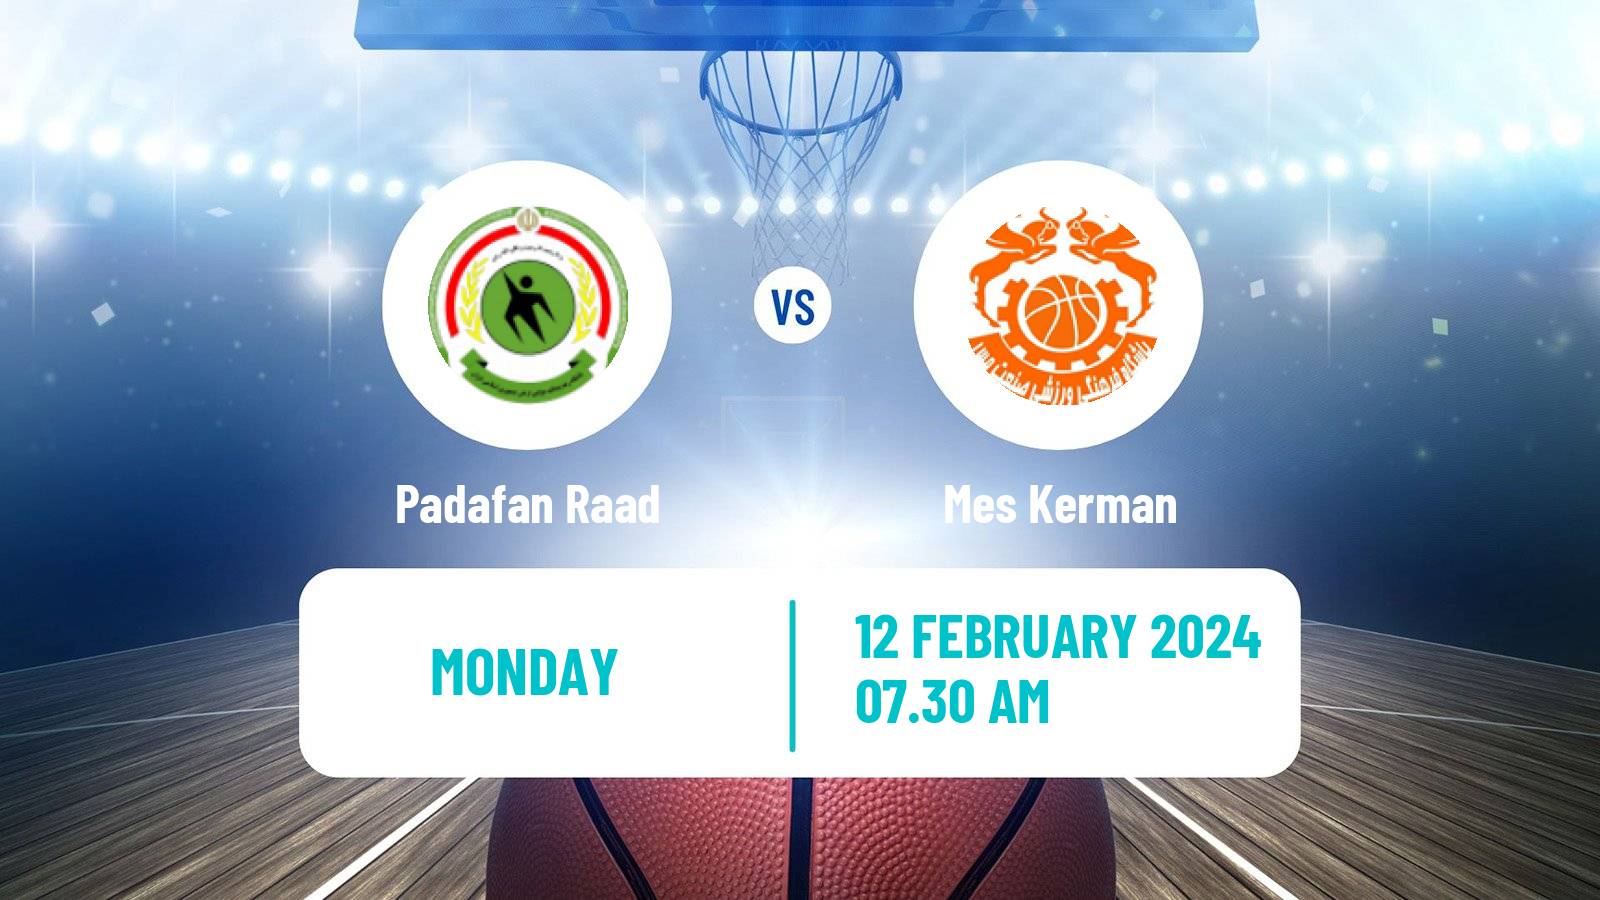 Basketball Iran Super League Basketball Padafan Raad - Mes Kerman